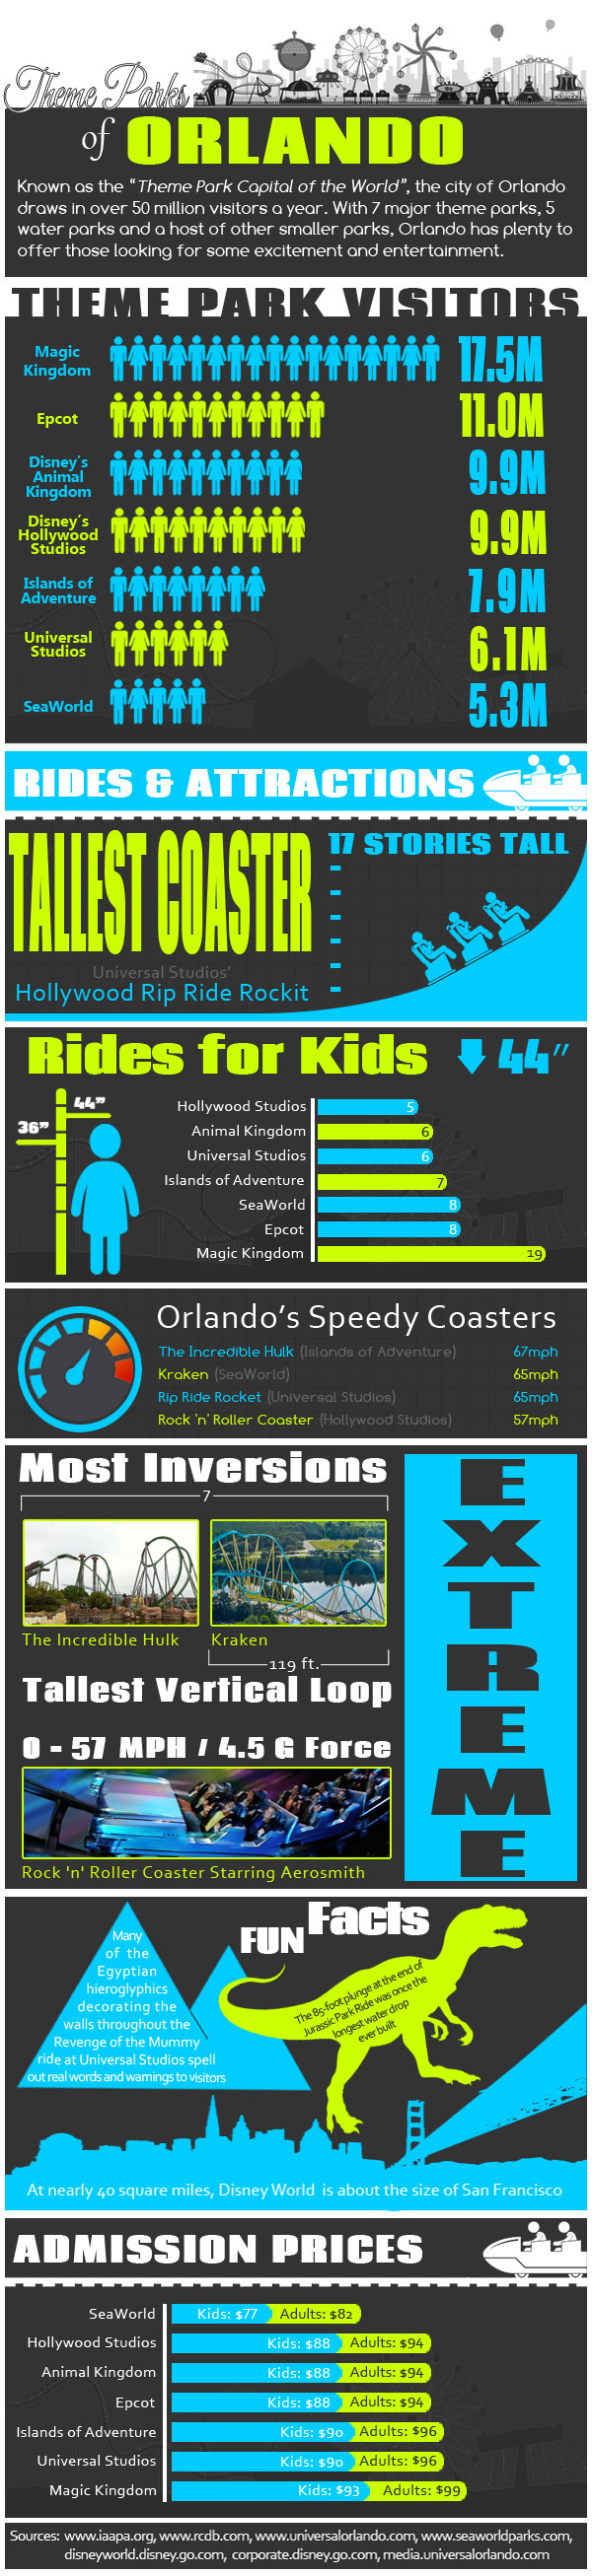 Theme Parks of Orlando Infographic